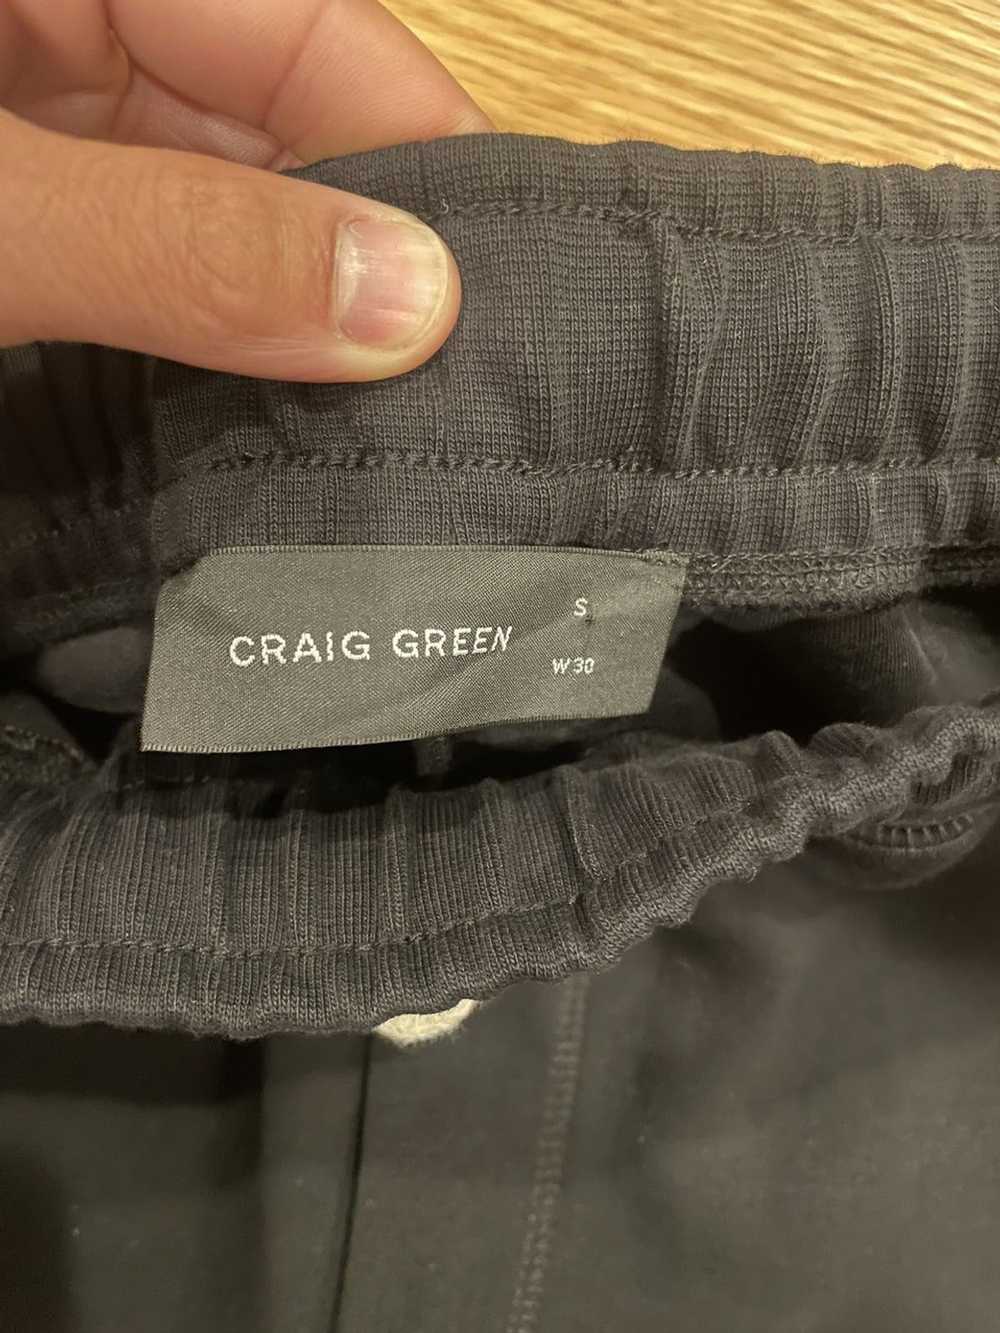 Craig Green 🔥 Cropped Neoprene Joggers 🔥 - image 5